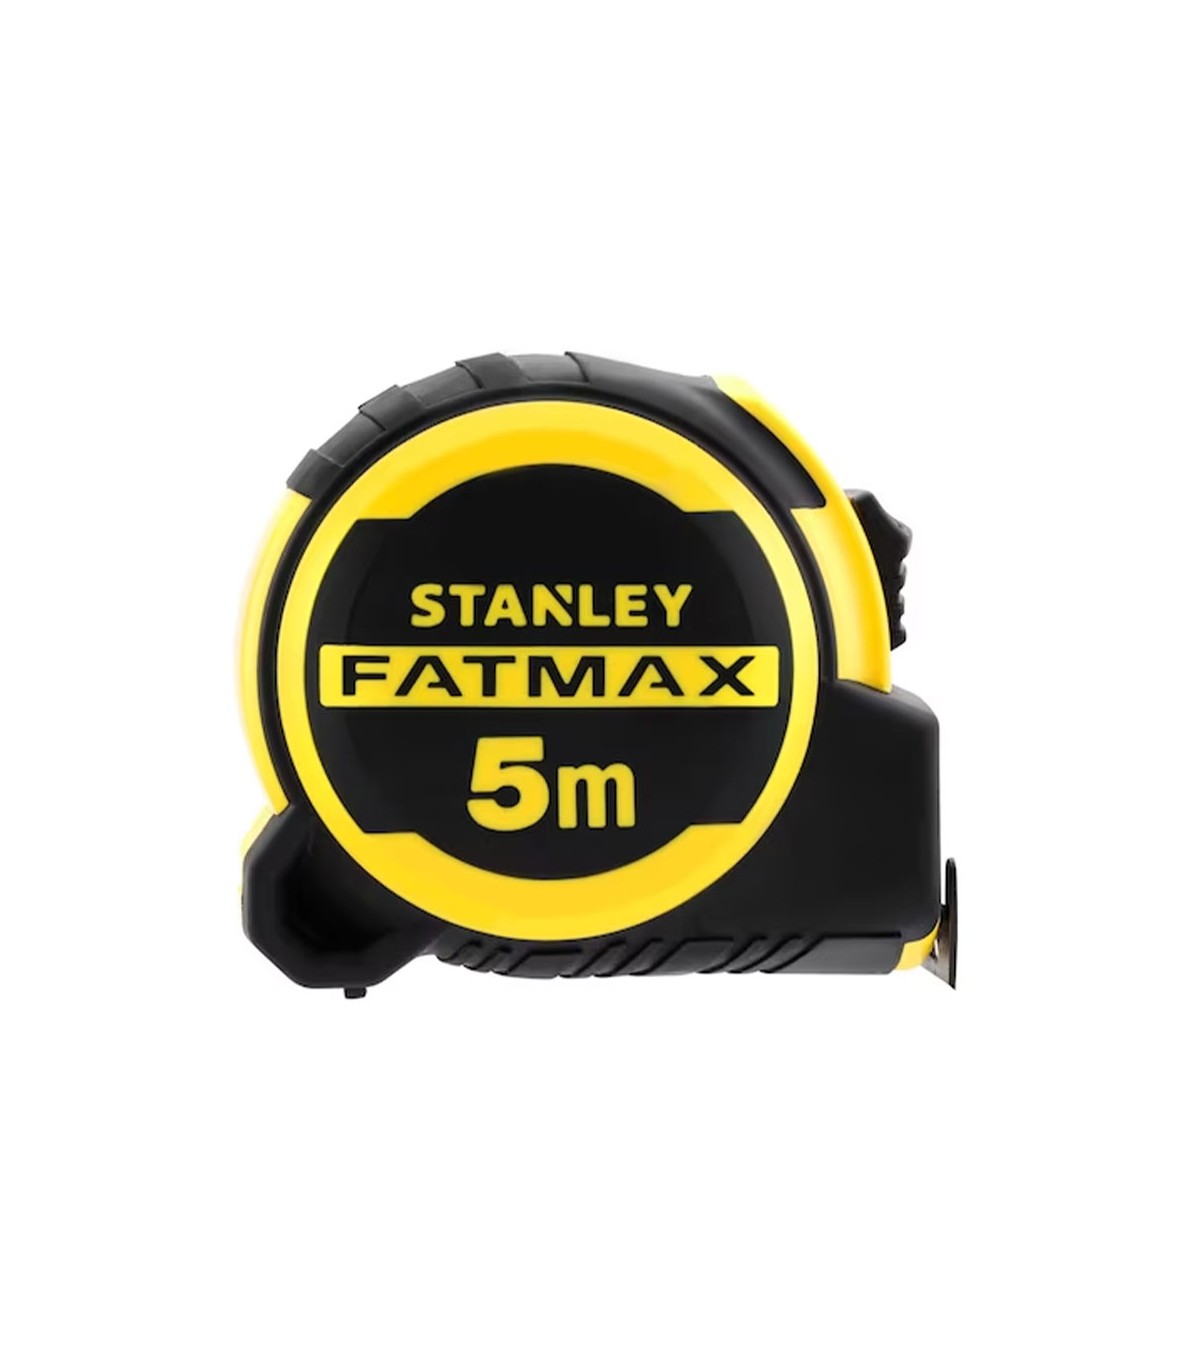 Mètre ruban Blade Armor double marquage FATMAX STANLEY - Clickoutil